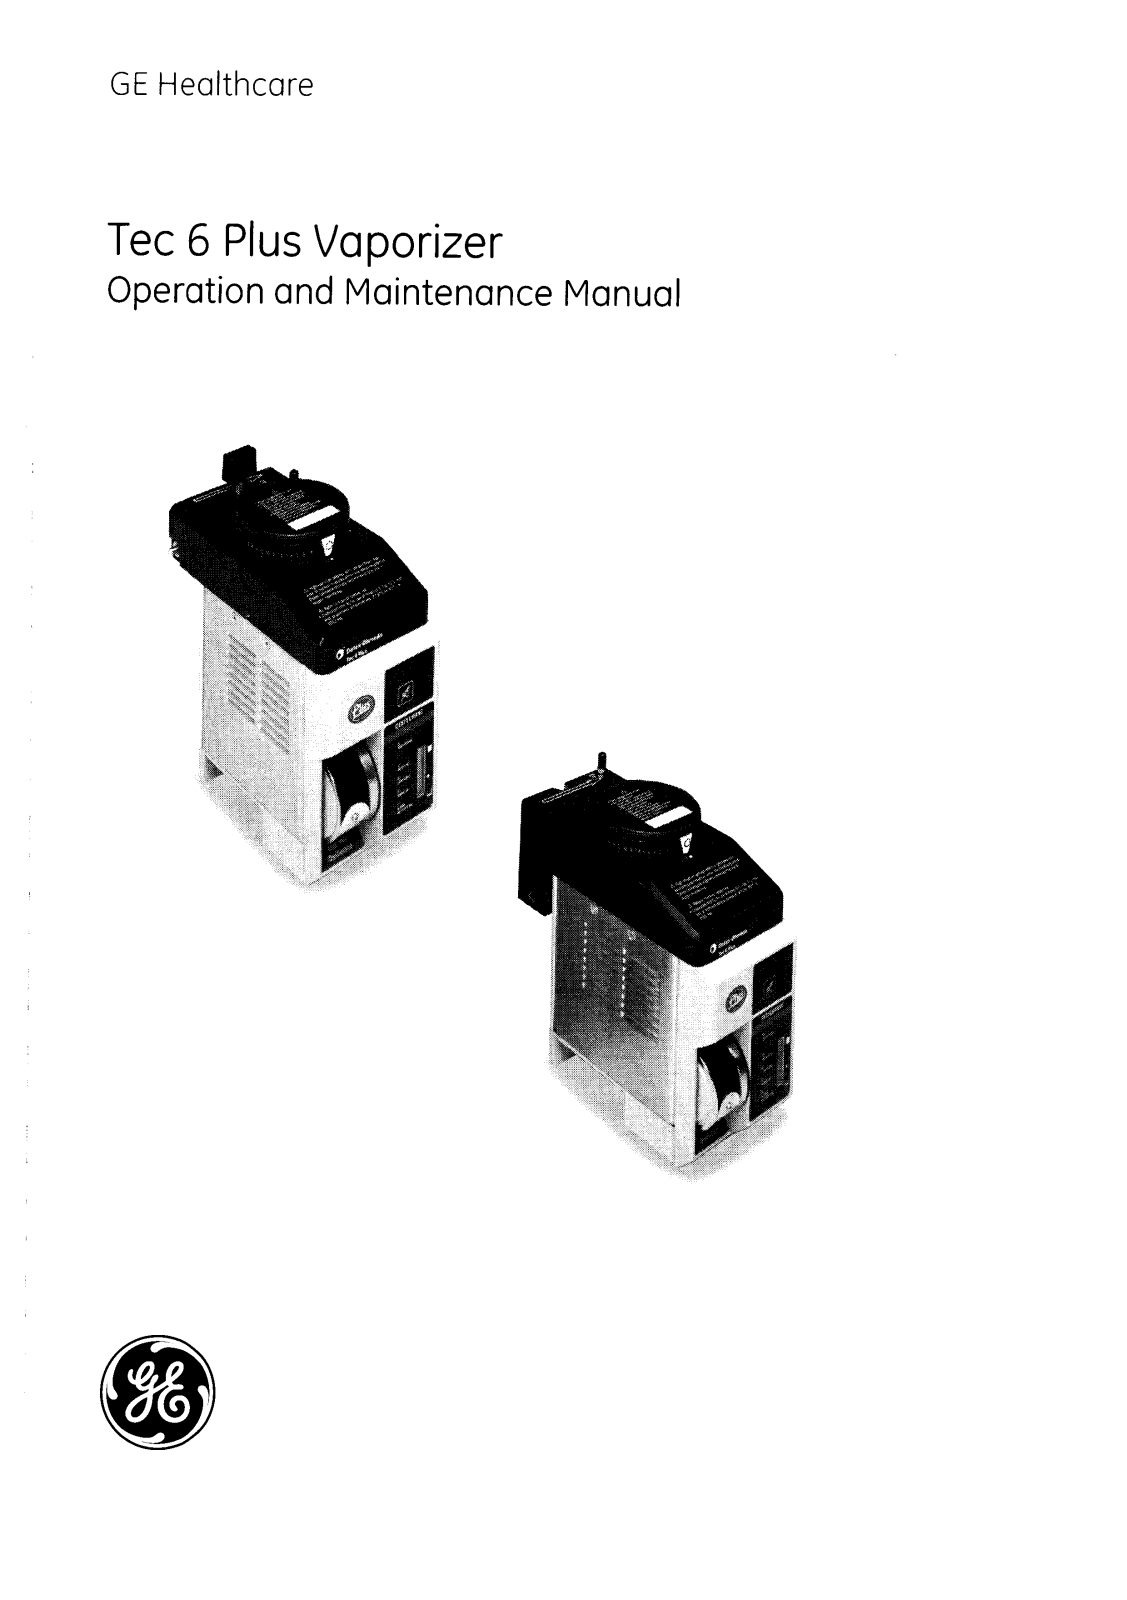 GE Tec 6+ User and service manual